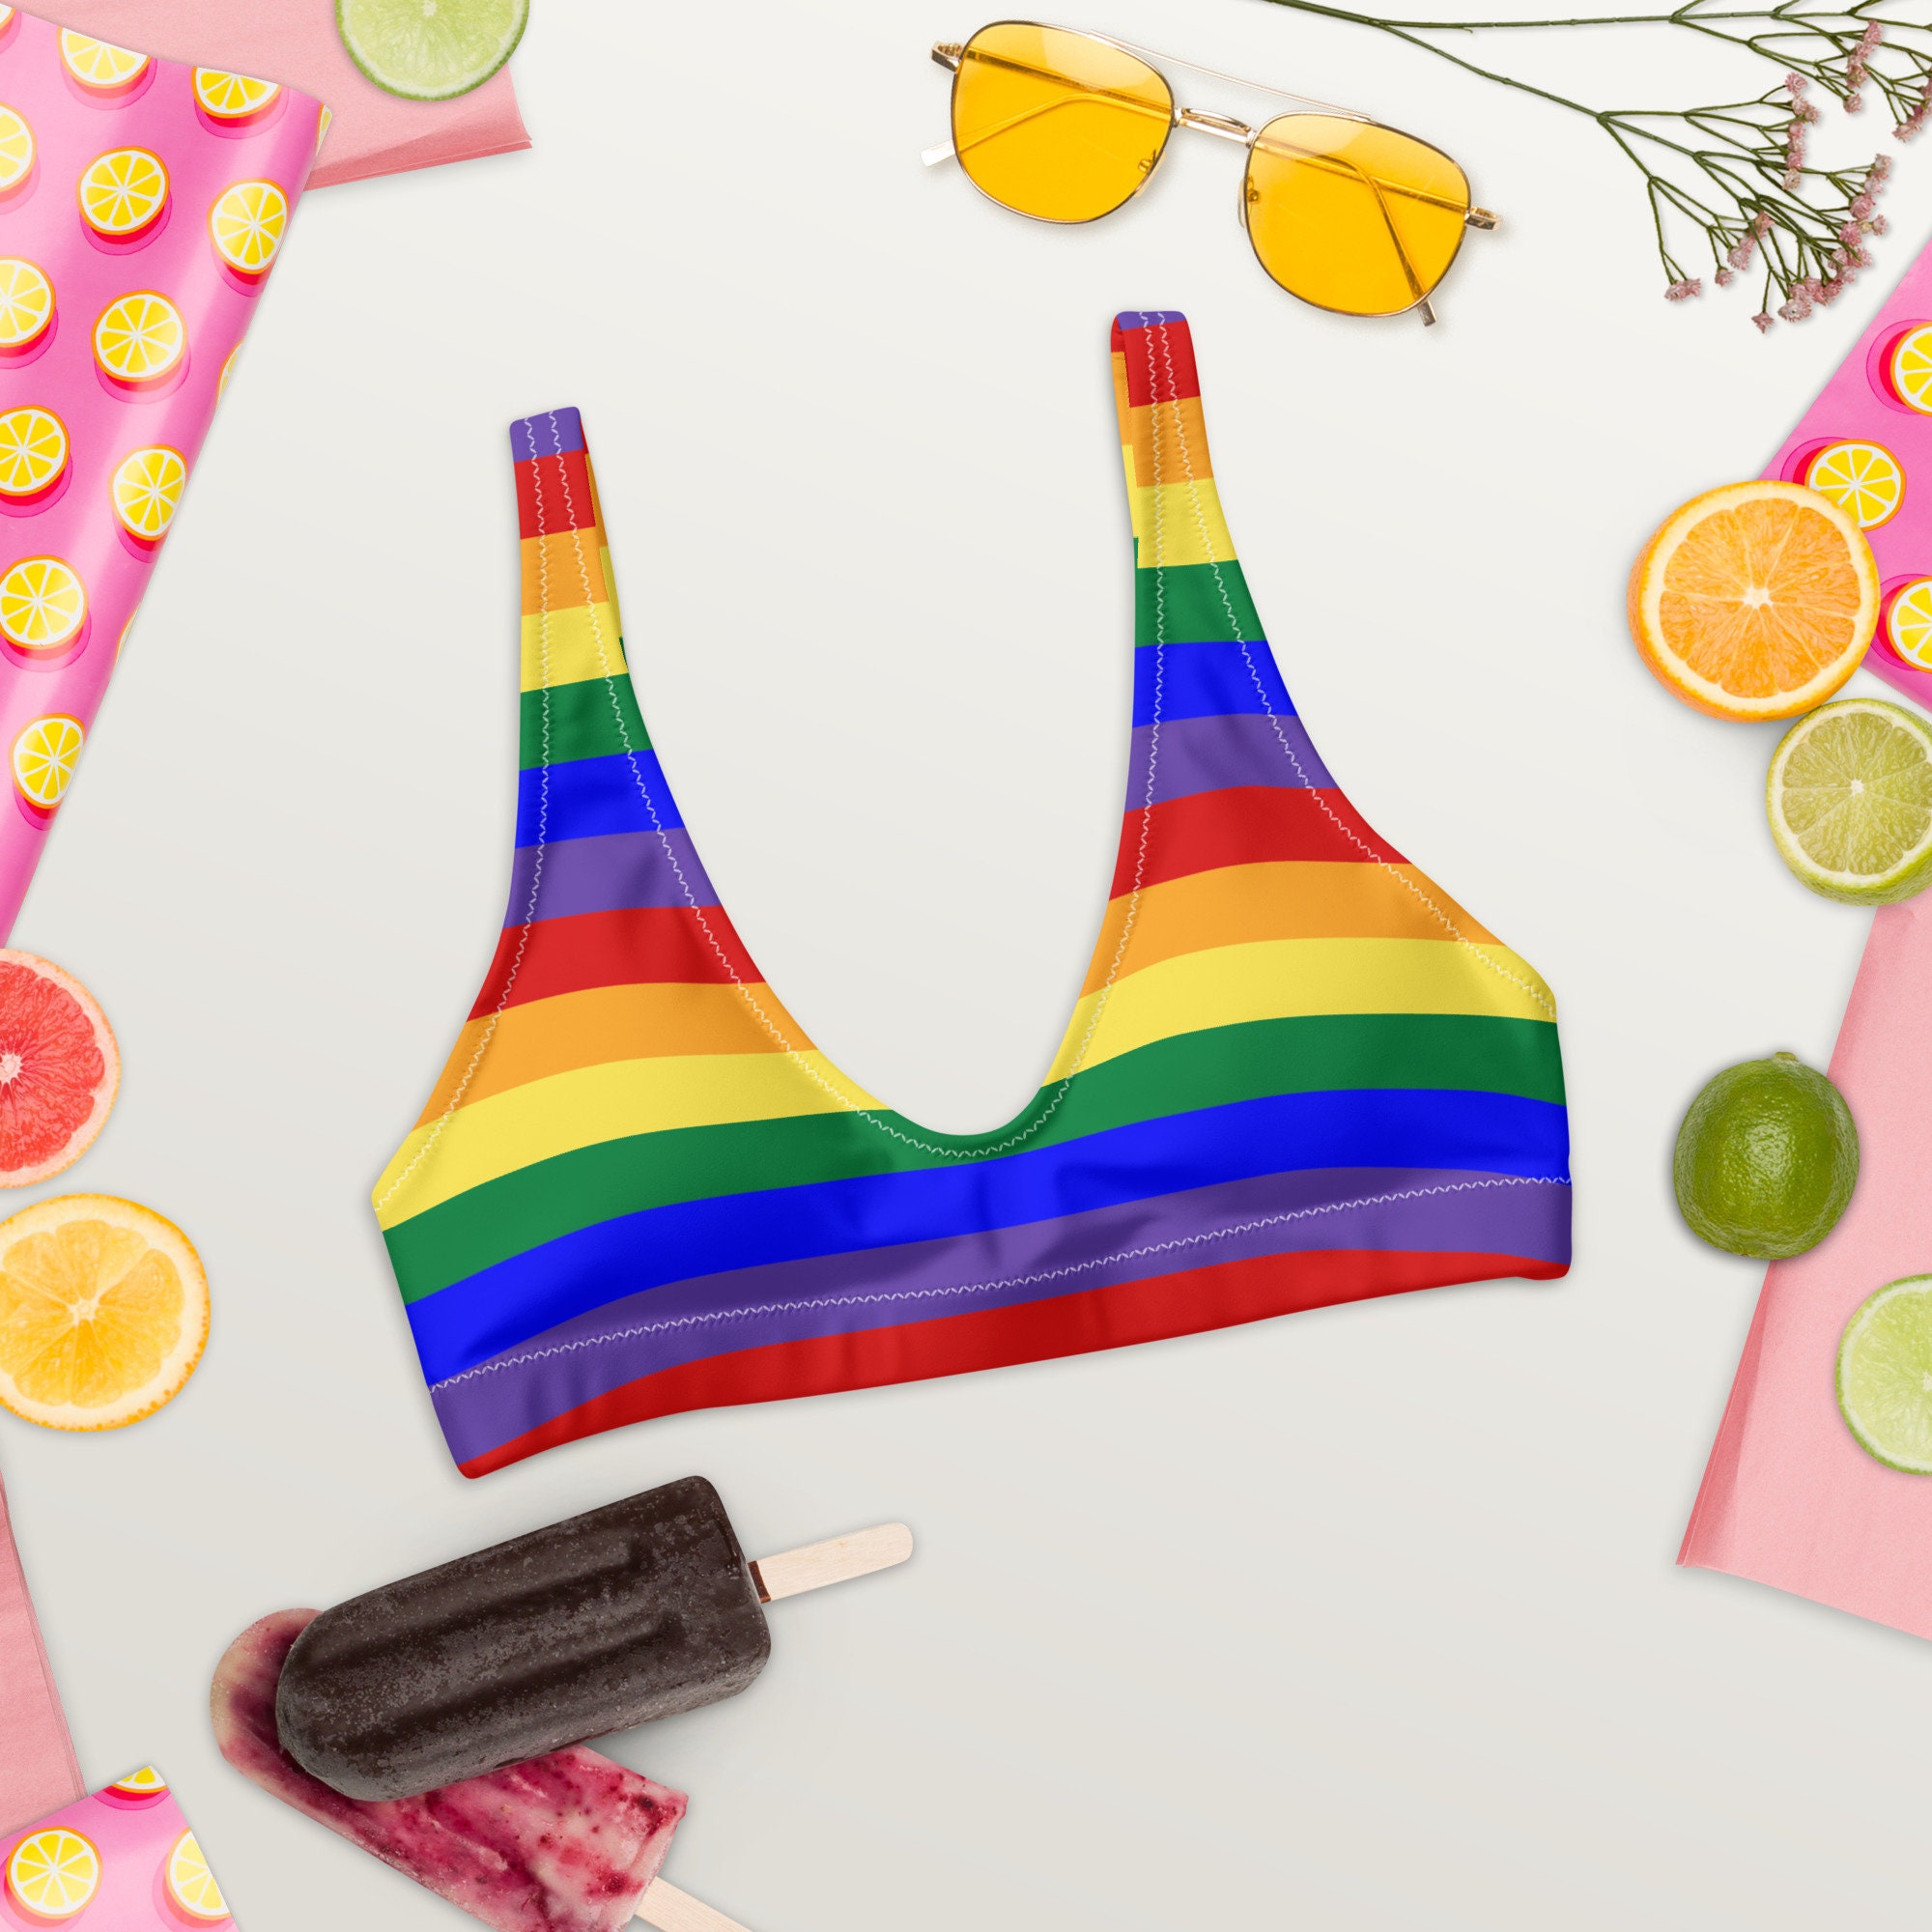 Buy Rainbow Bikini Online In India -  India